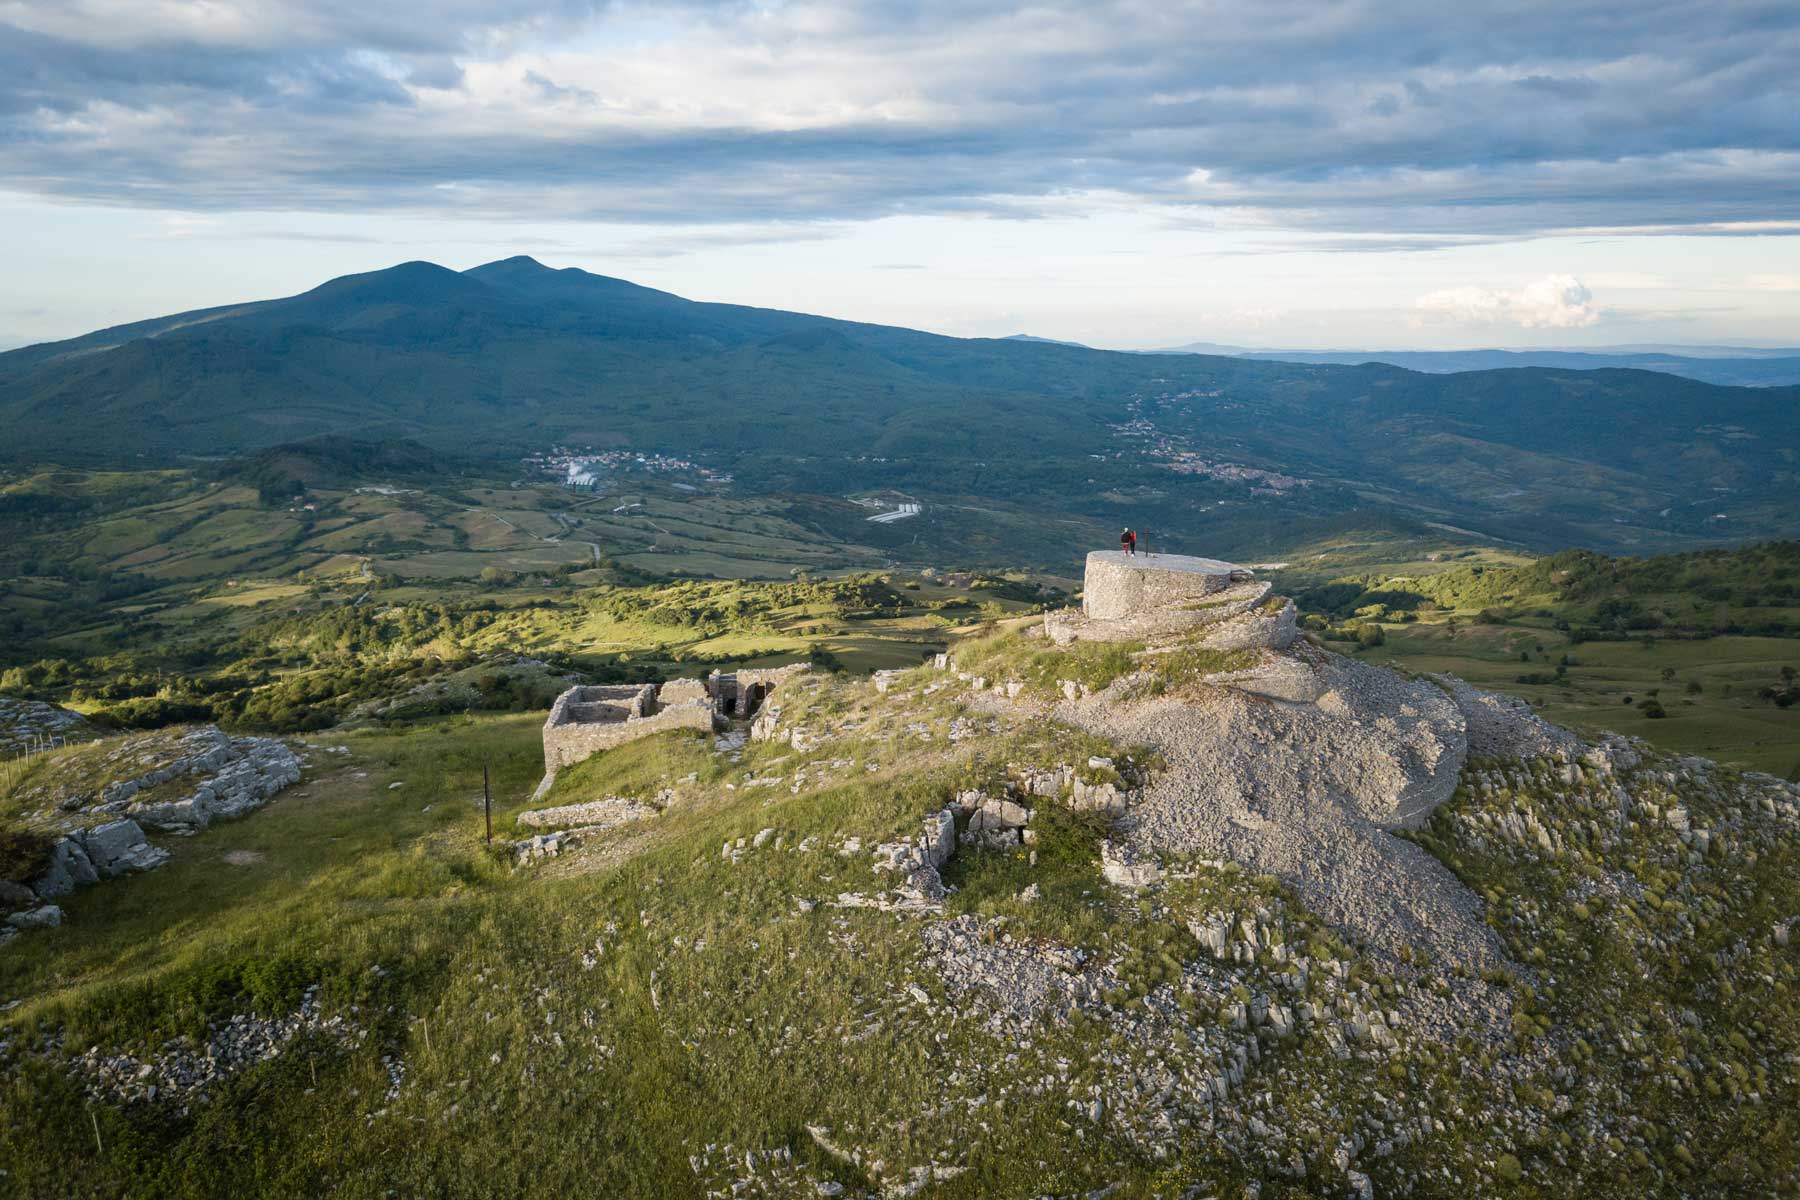 The Giurisdavidica tower on Monte Labbro